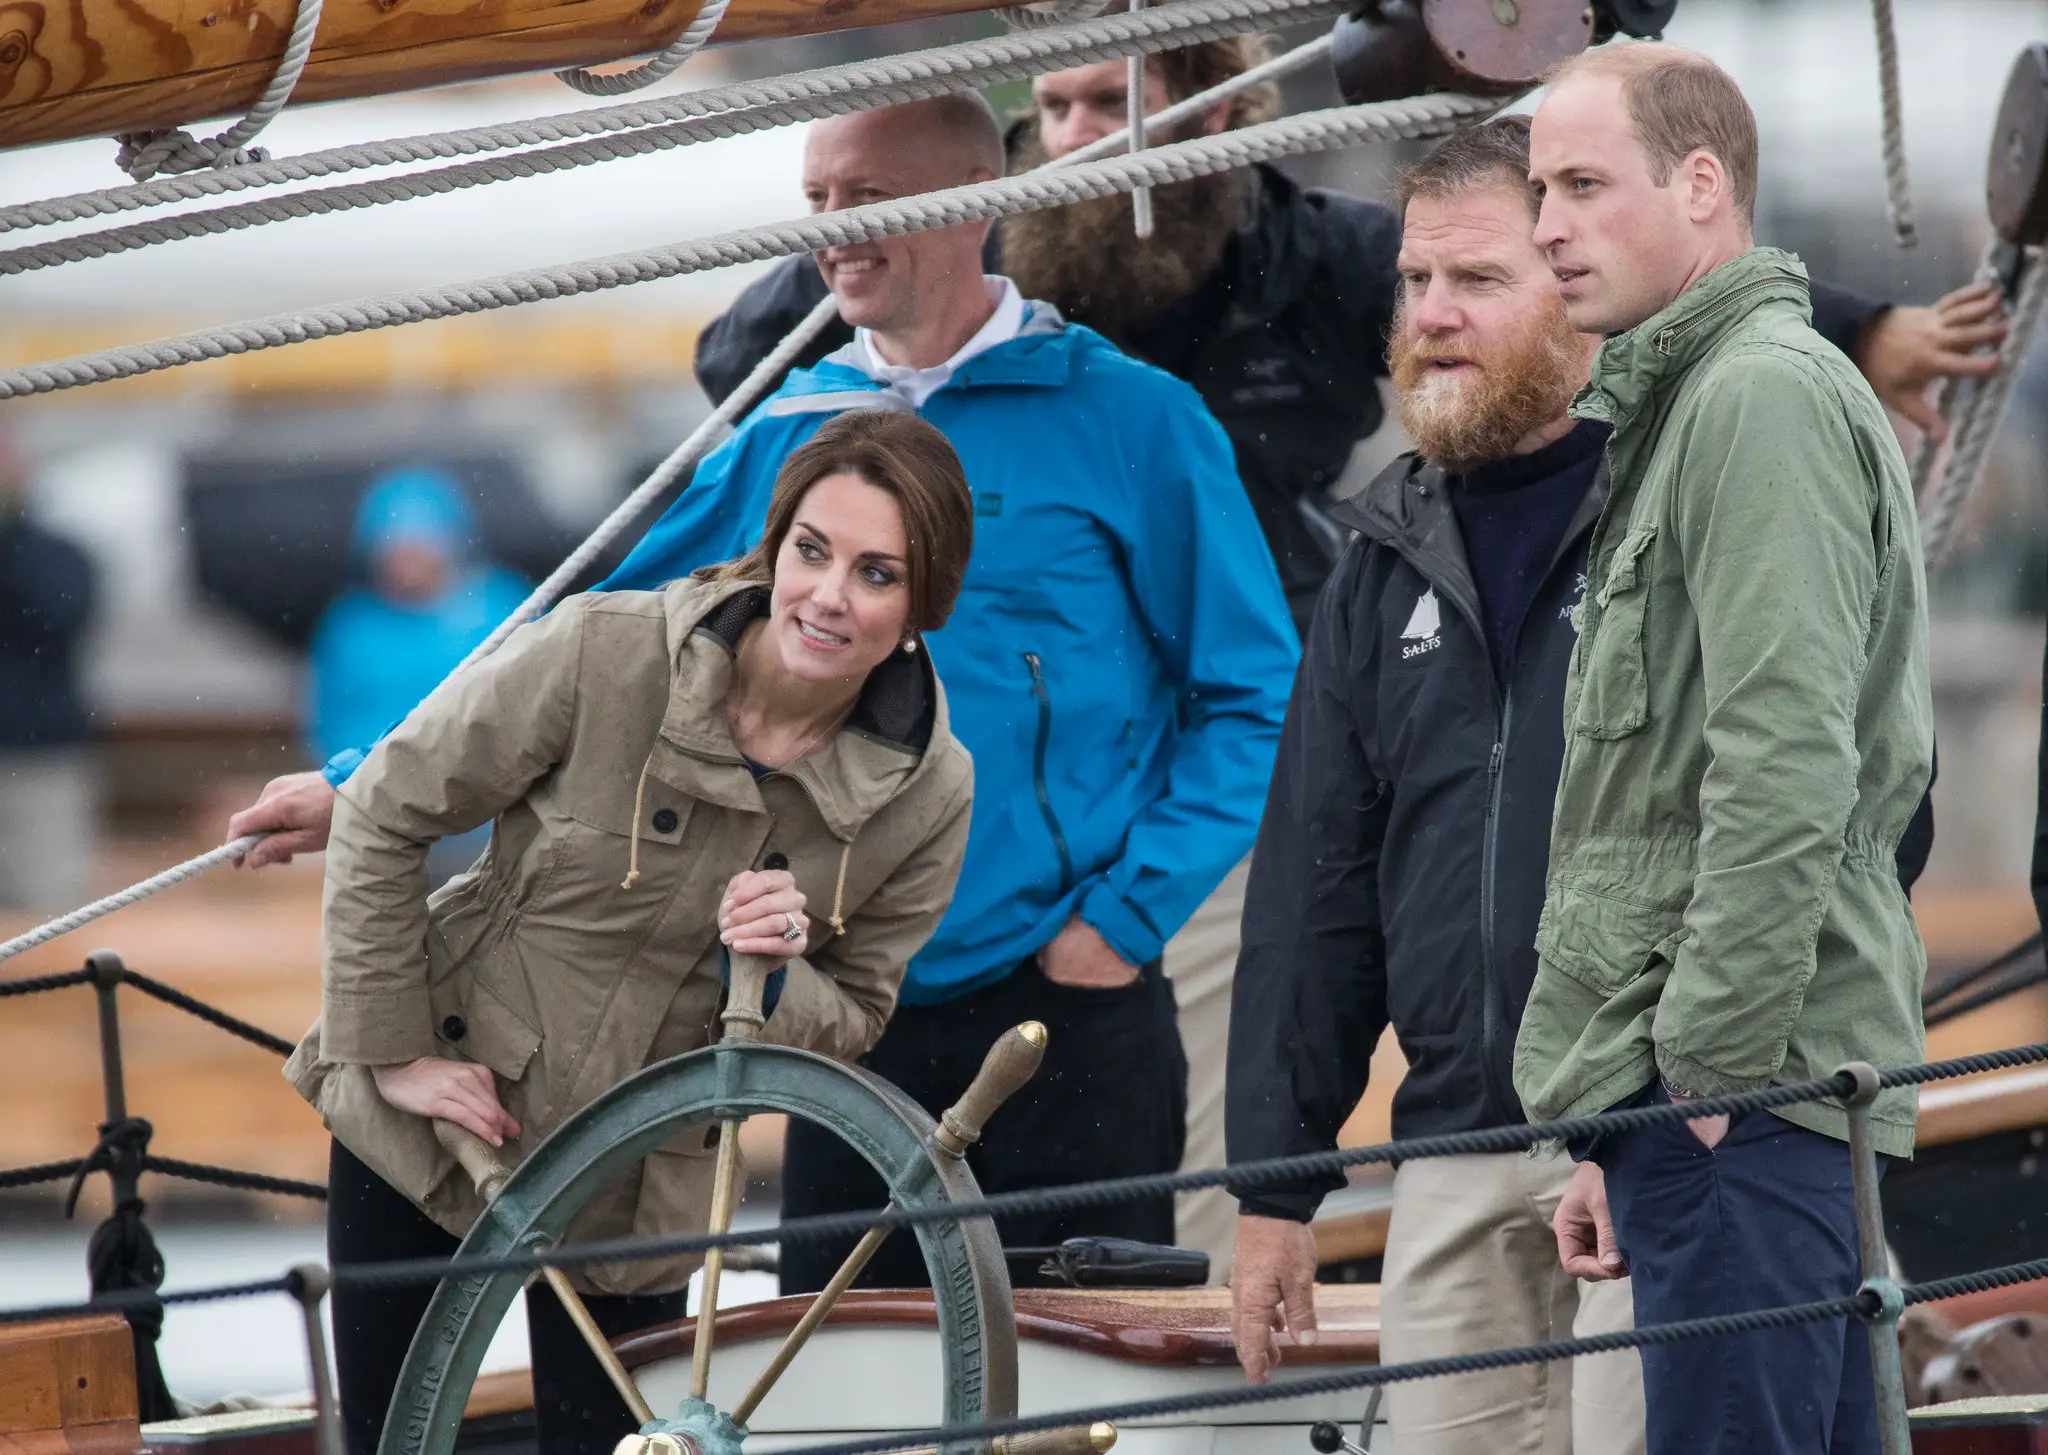 The Duke and Duchess of Cambridge on boat fishing